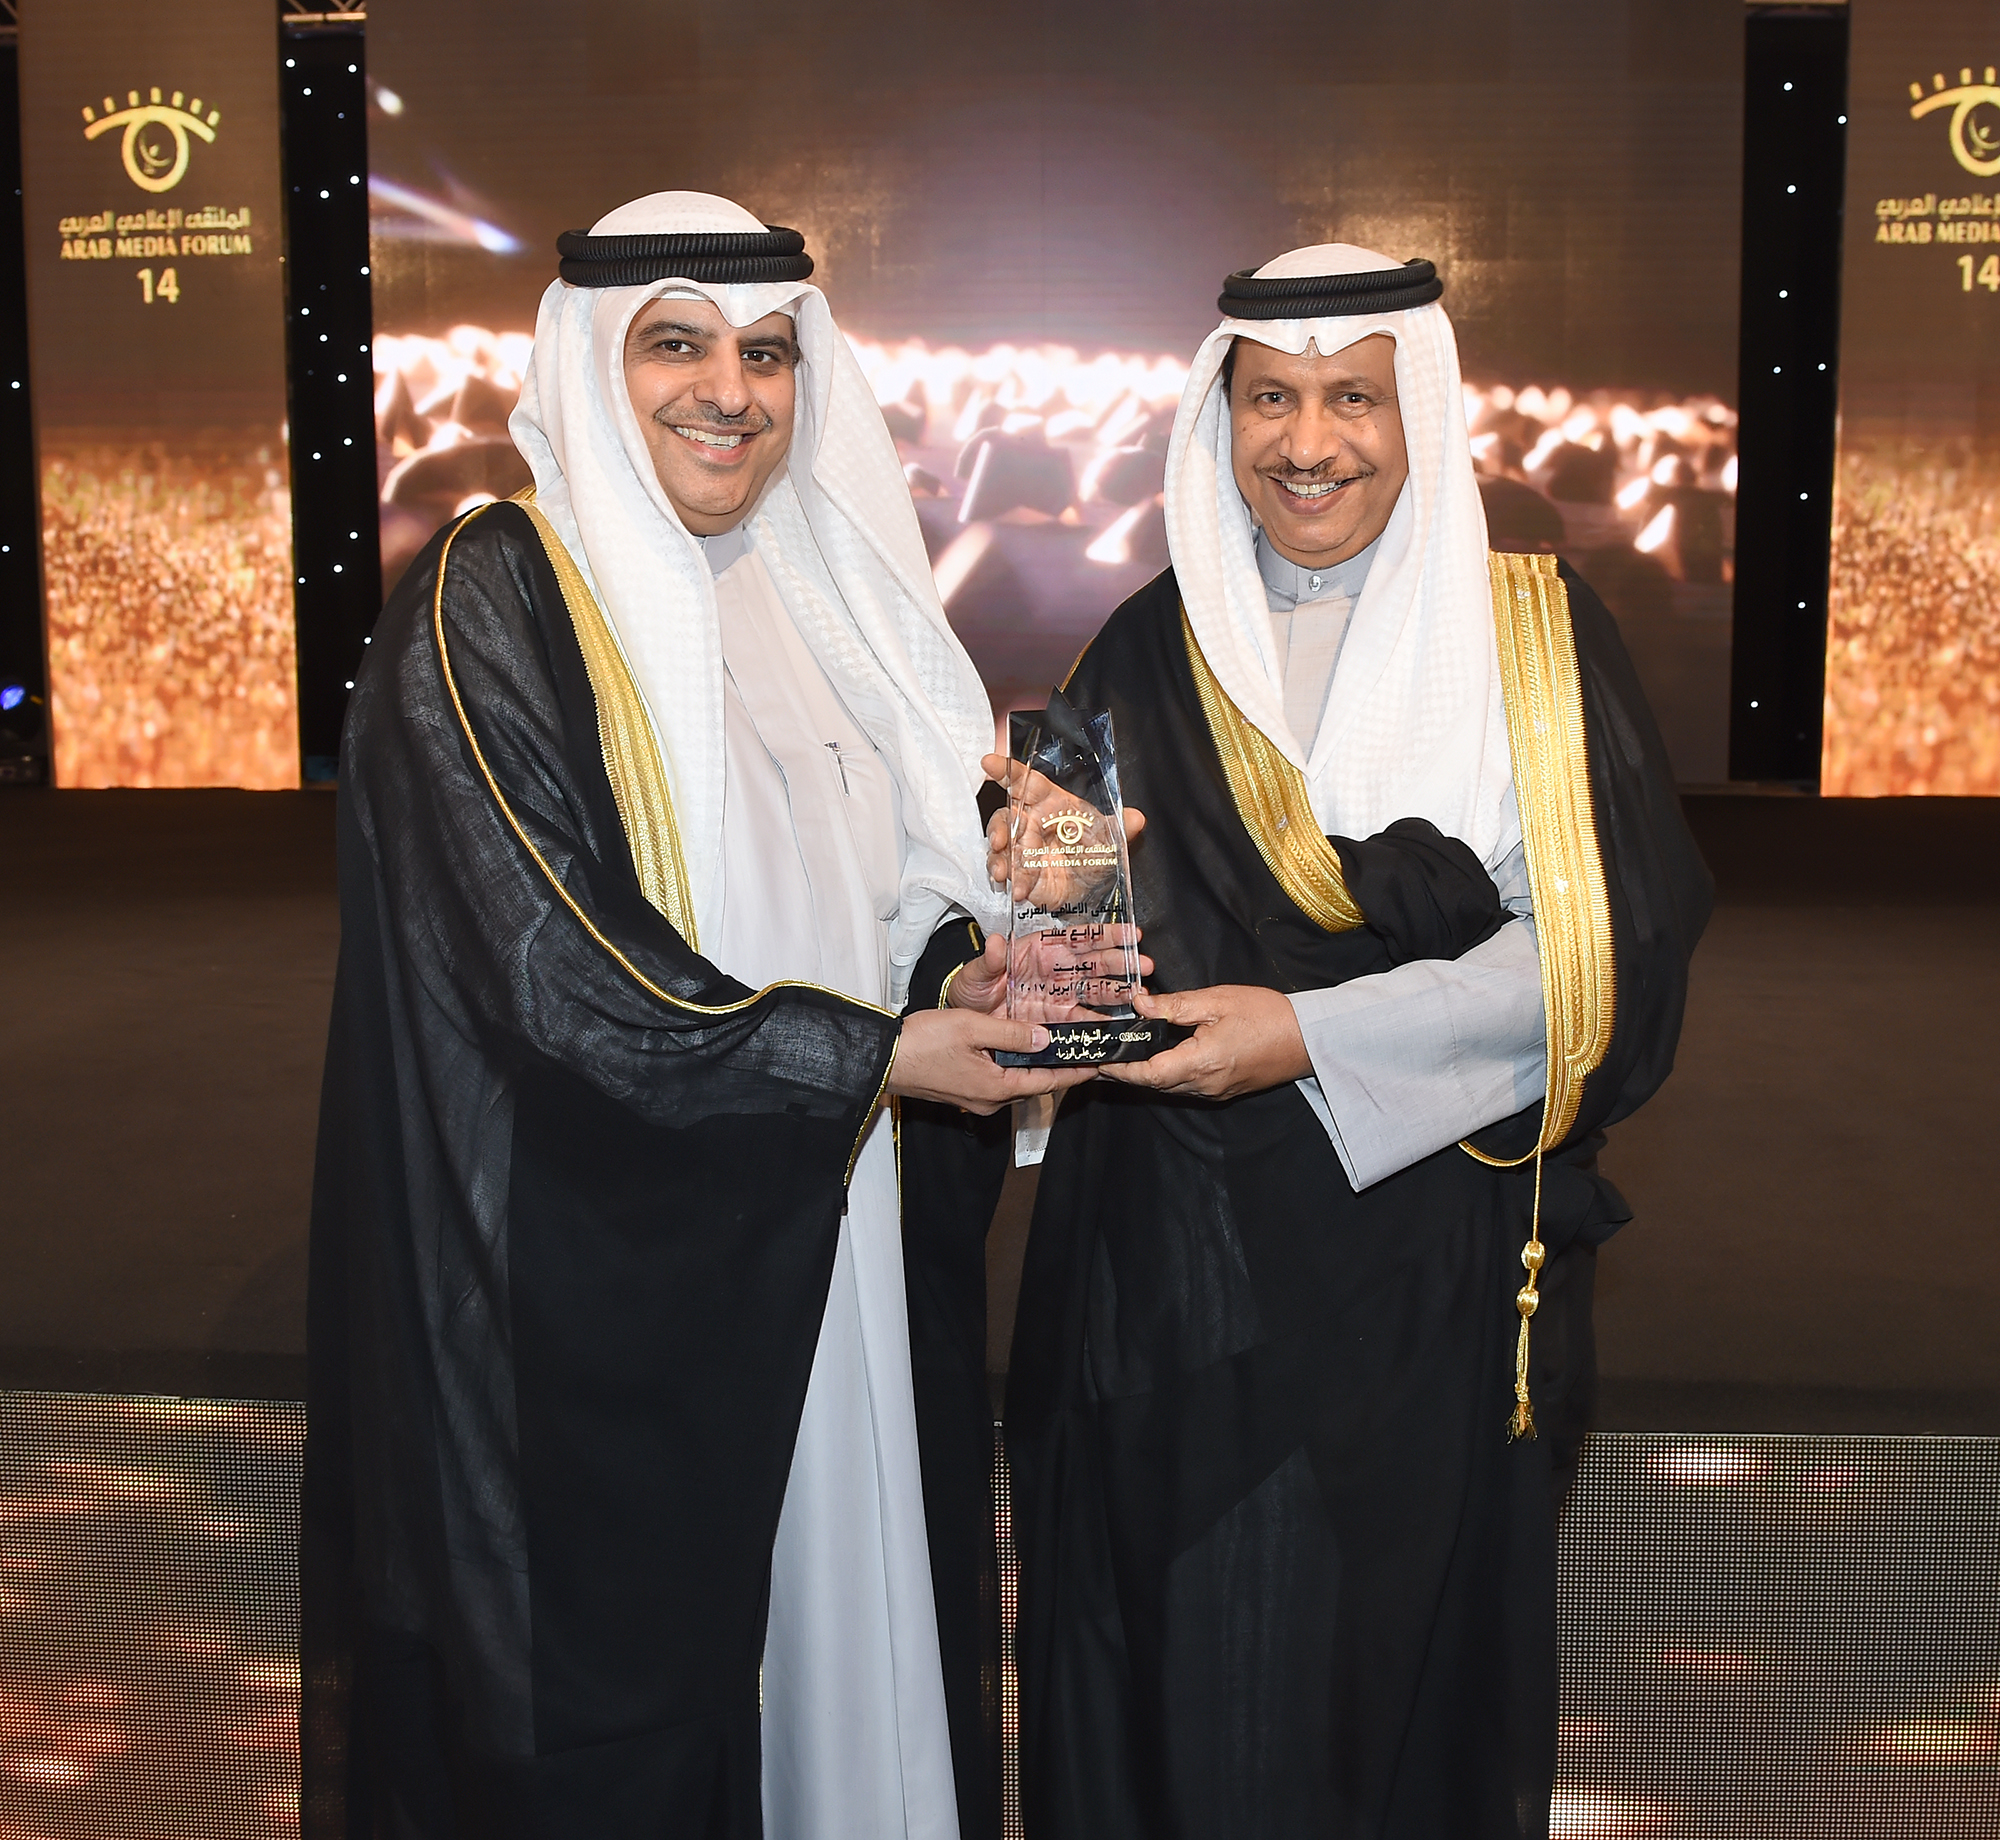 His Highness the Prime Minister Sheikh Jaber Al-Mubarak Al-Hamad Al-Sabah opens the 14th Arab Media Forum